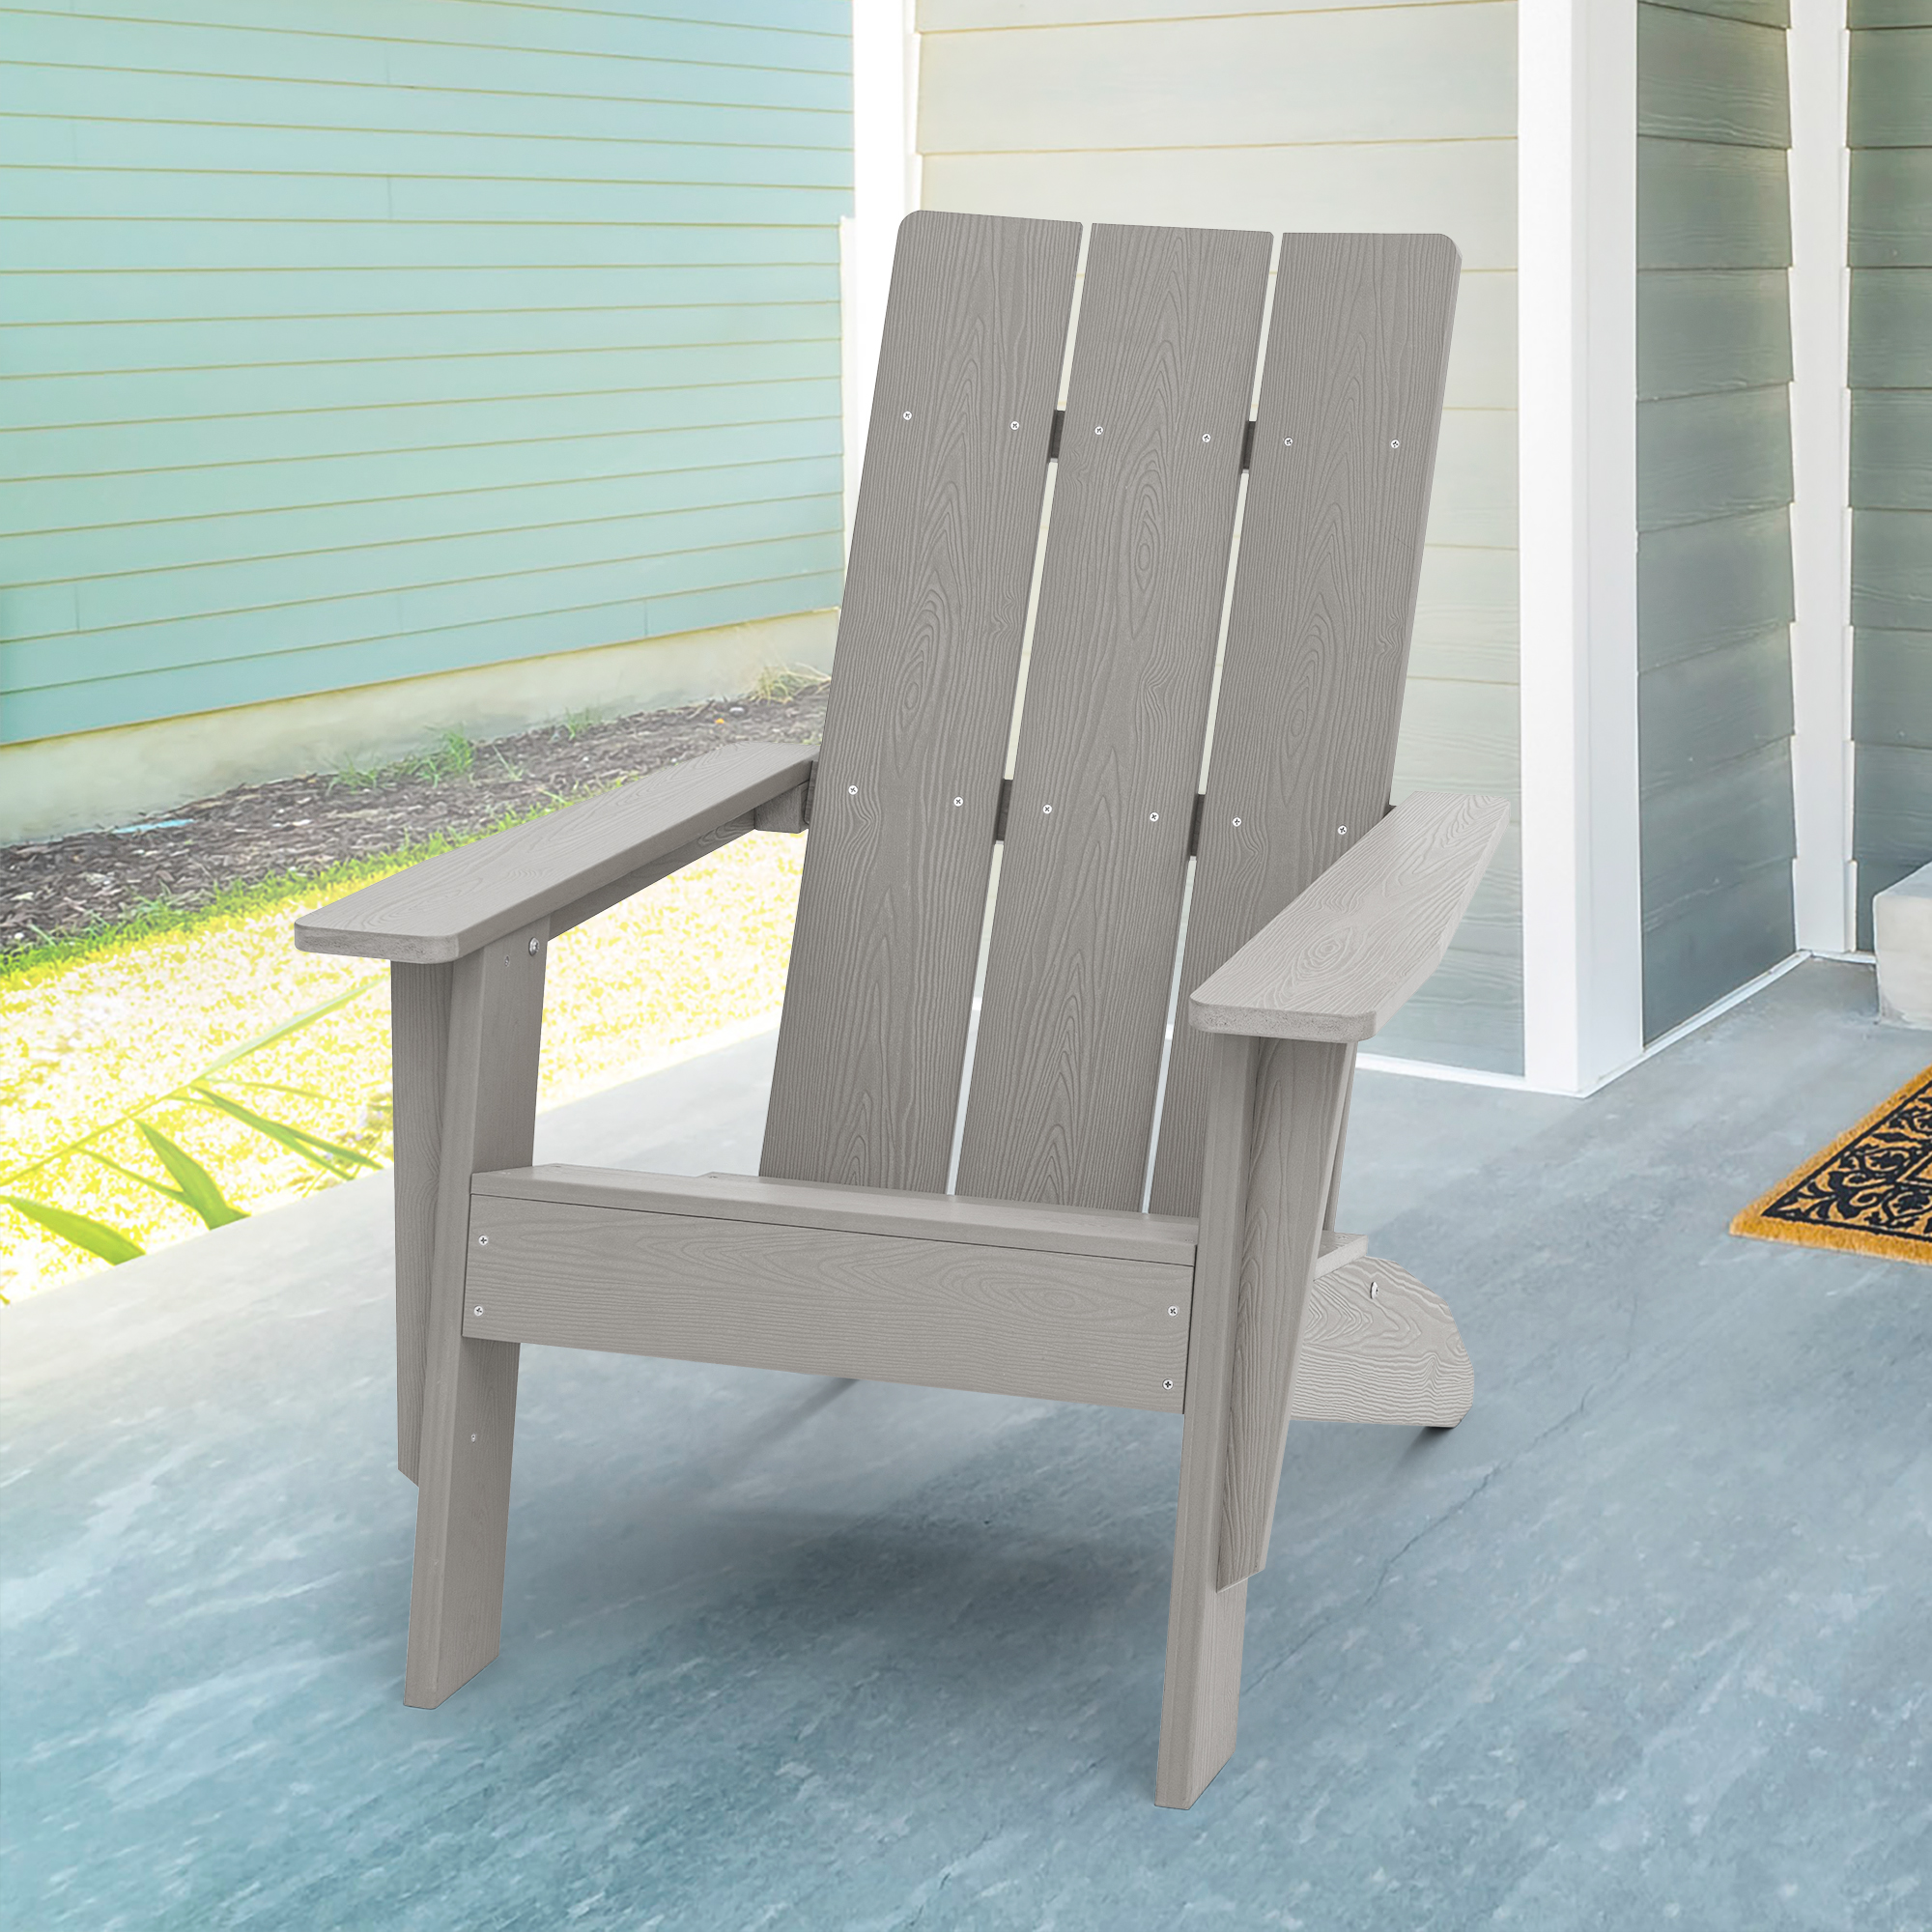 CHYVARY 1 Peak Adirondack Chair, Patio Outdoor Plastic Resin Furniture,Light Gray - image 1 of 7